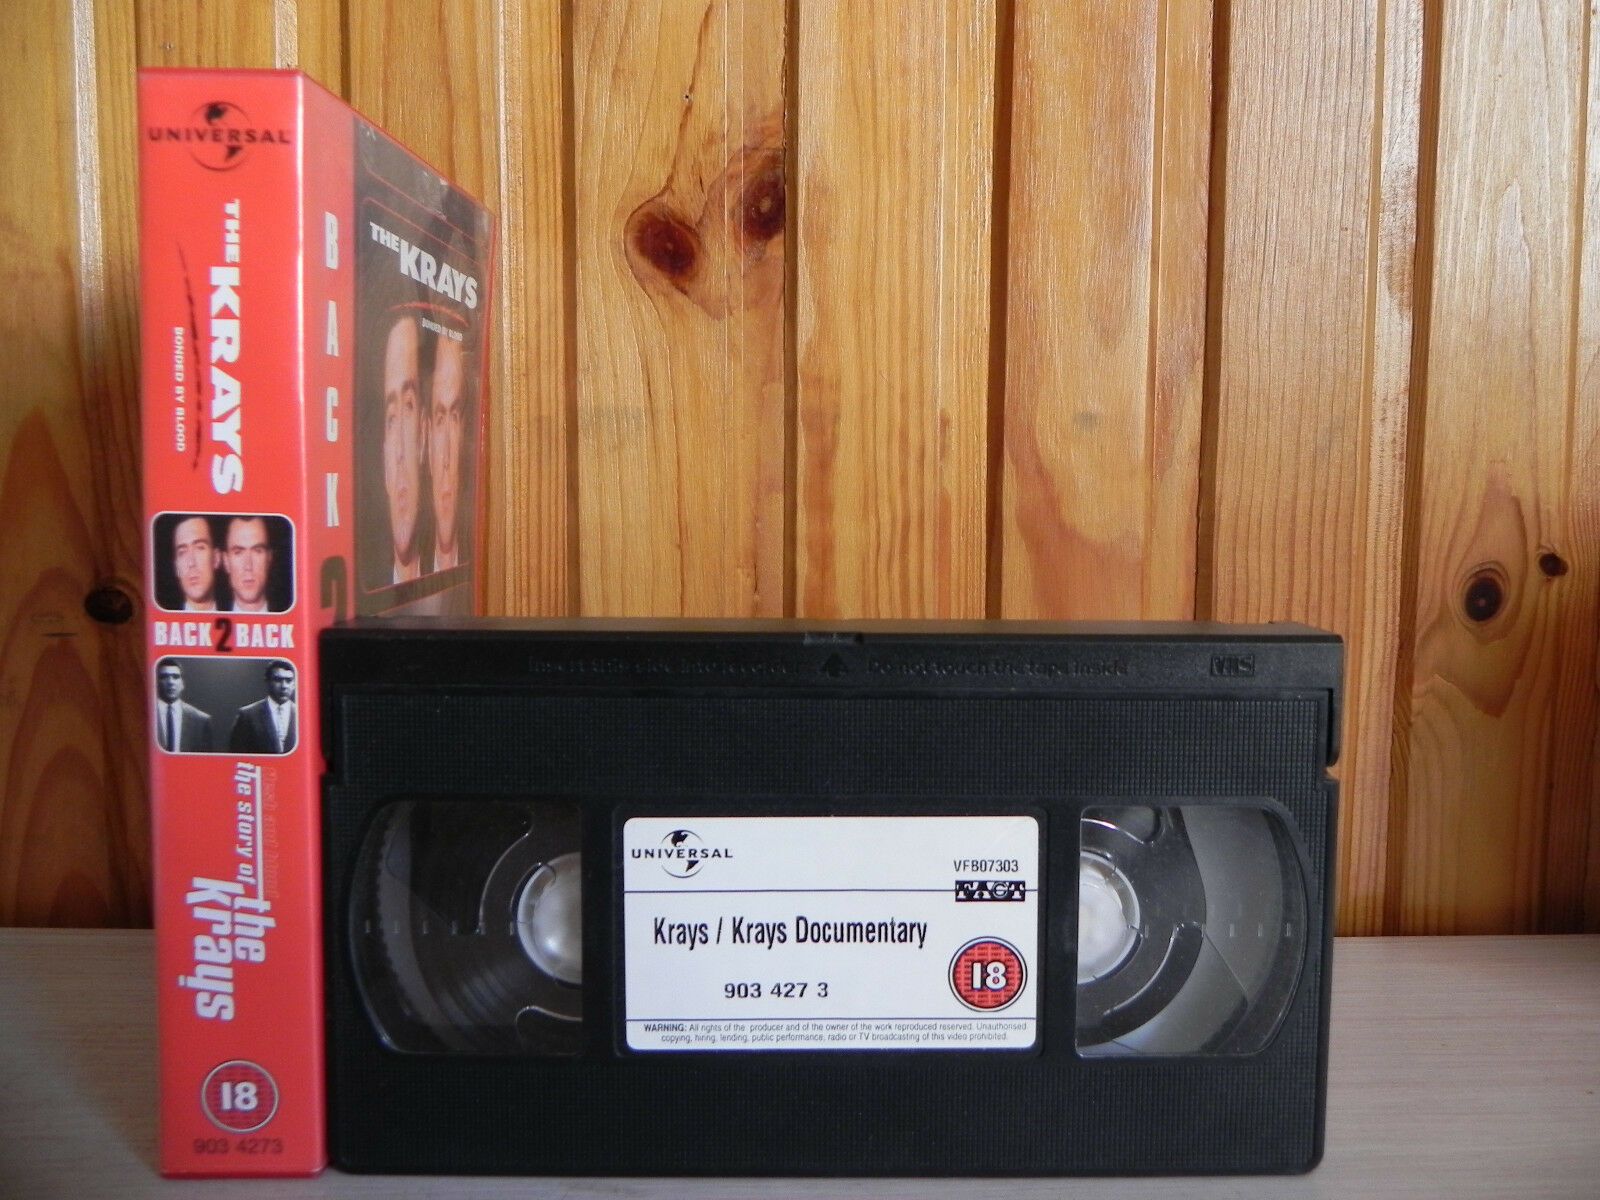 The Krays - Flesh And Blood: Story Of The Krays - Criminal - Back 2 Back - VHS-